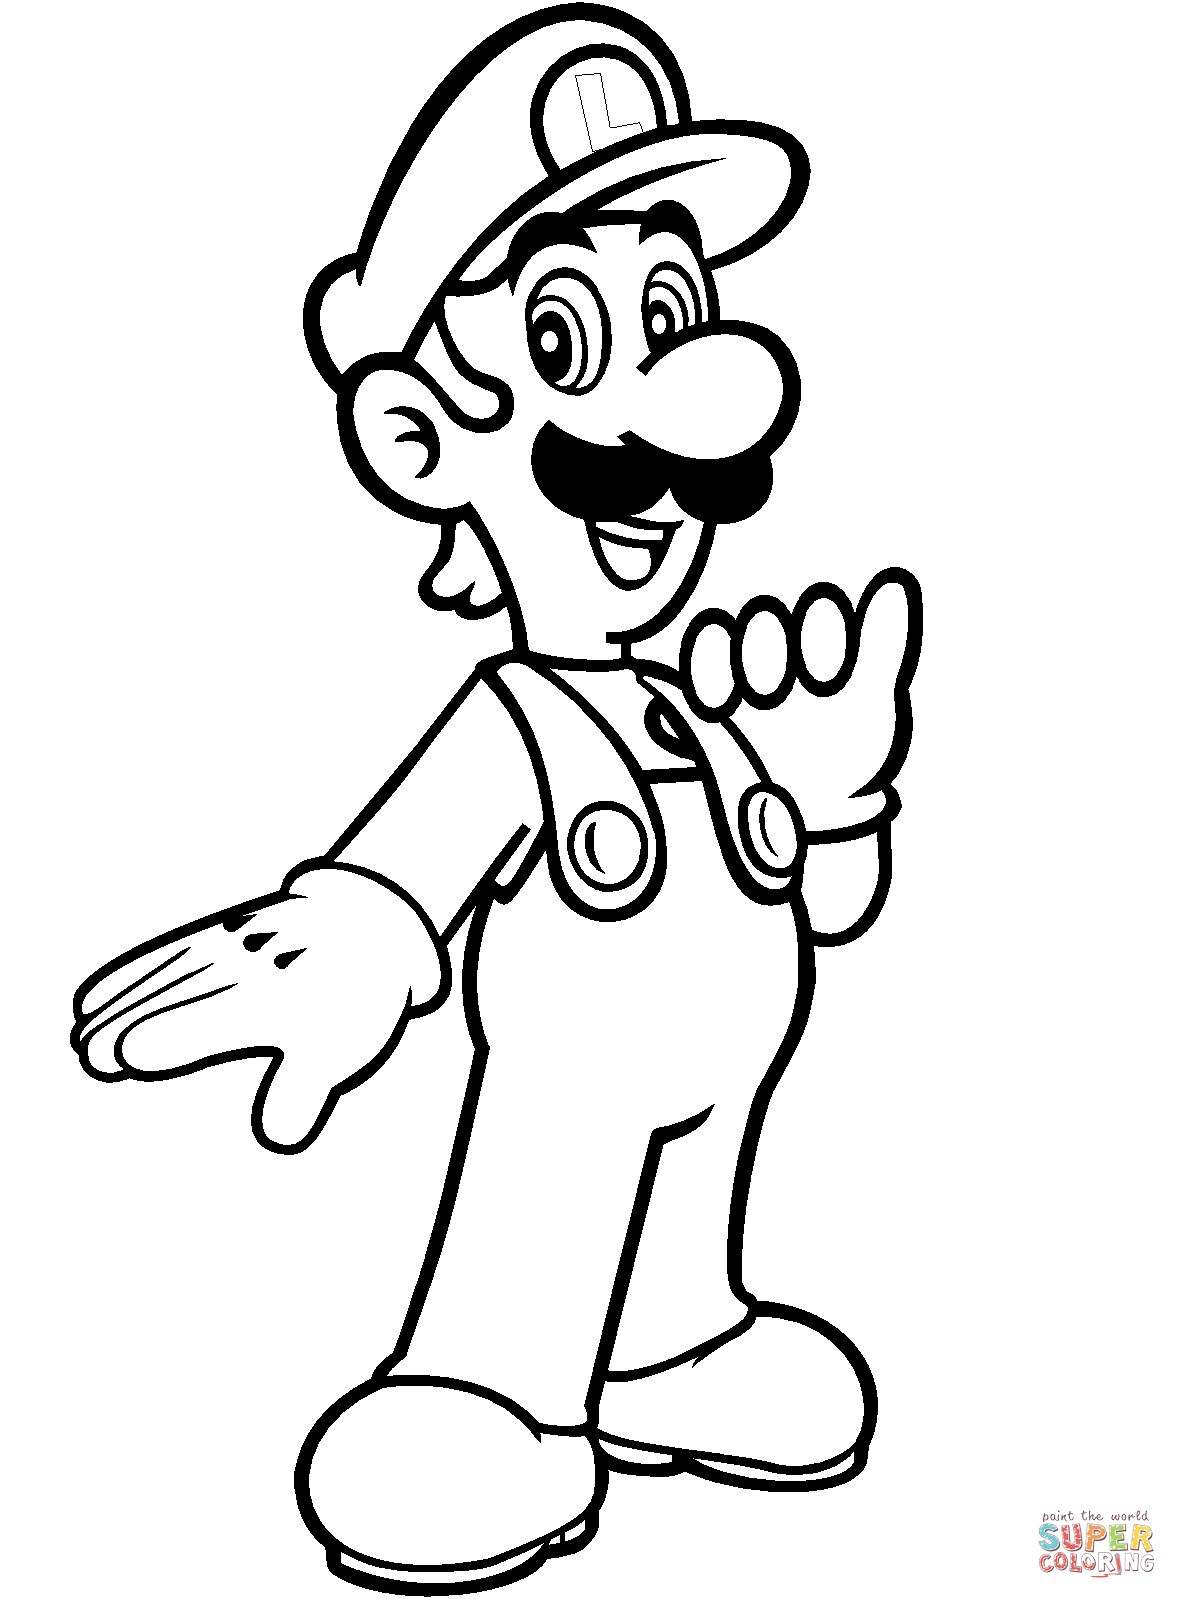 Mario Bros.Printable Coloring Pages
 Luigi from Mario Bros coloring page